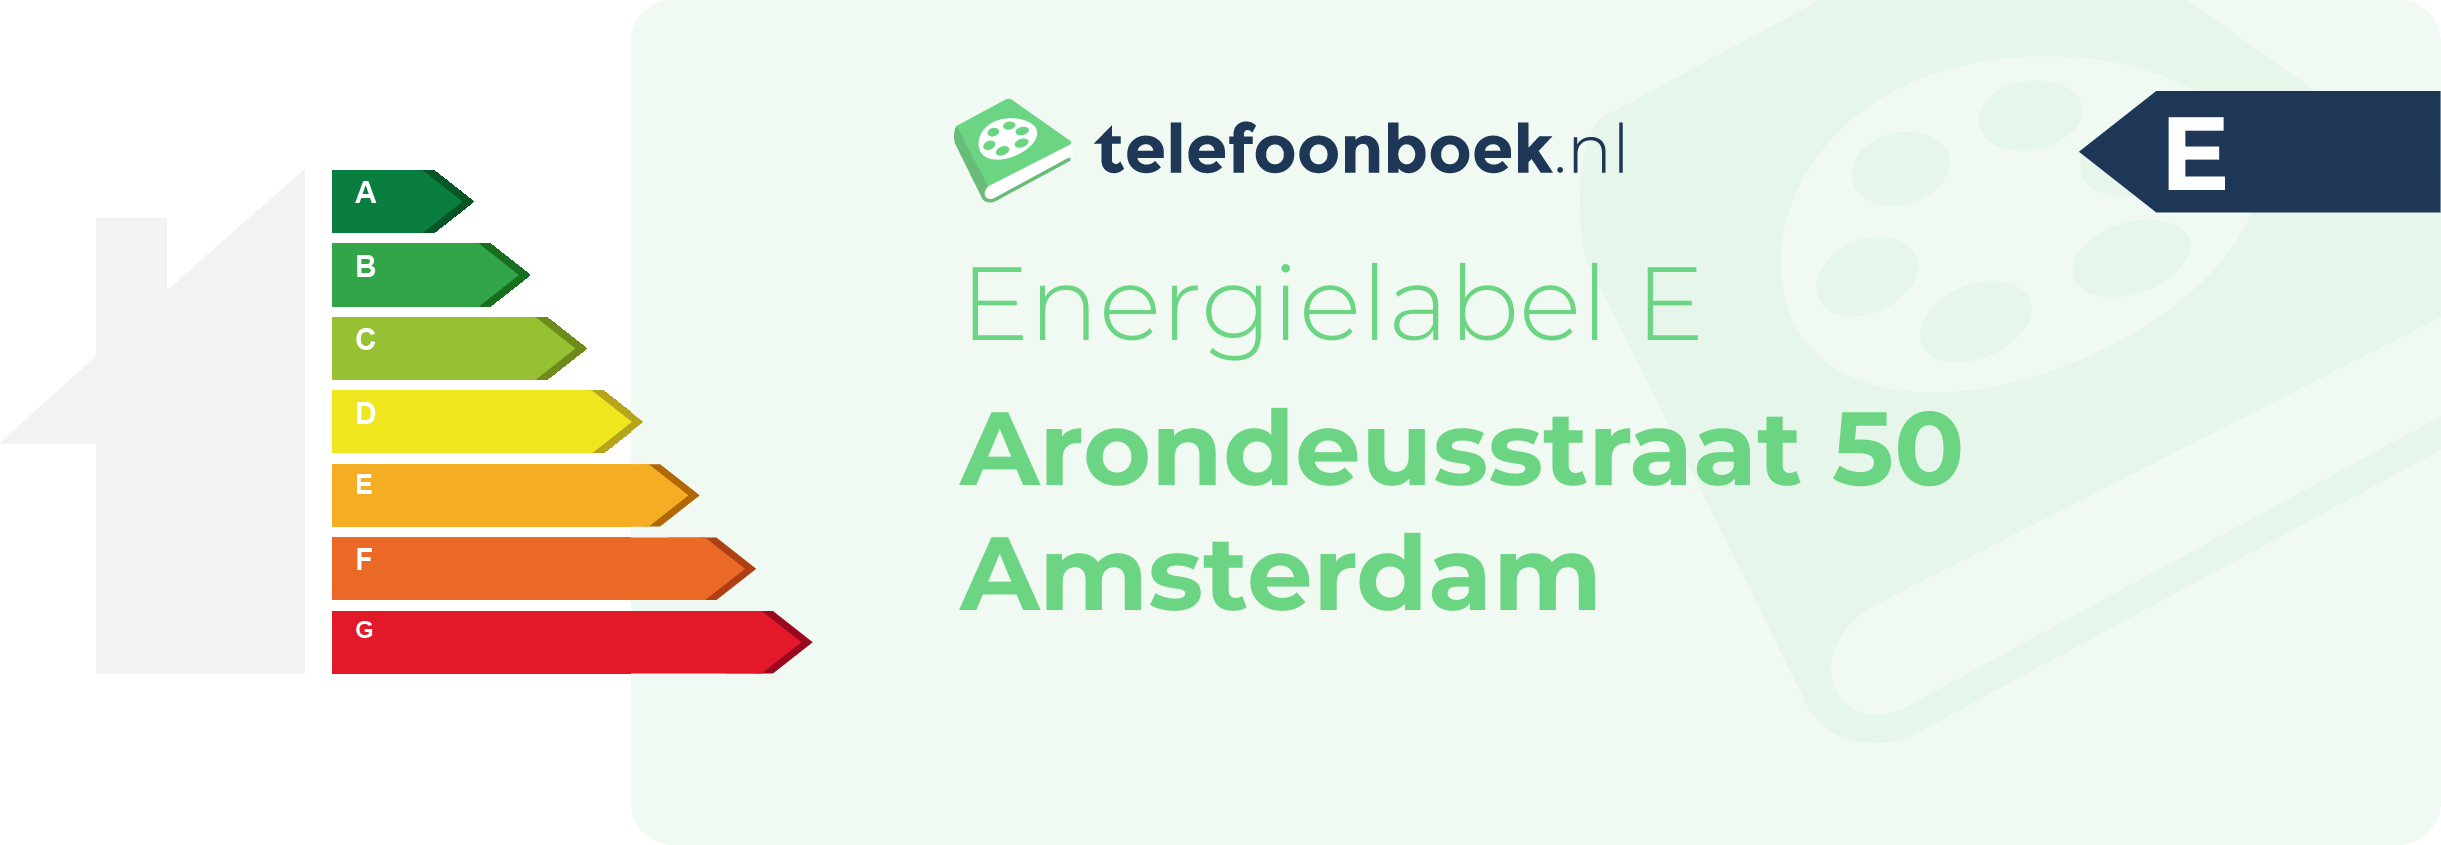 Energielabel Arondeusstraat 50 Amsterdam